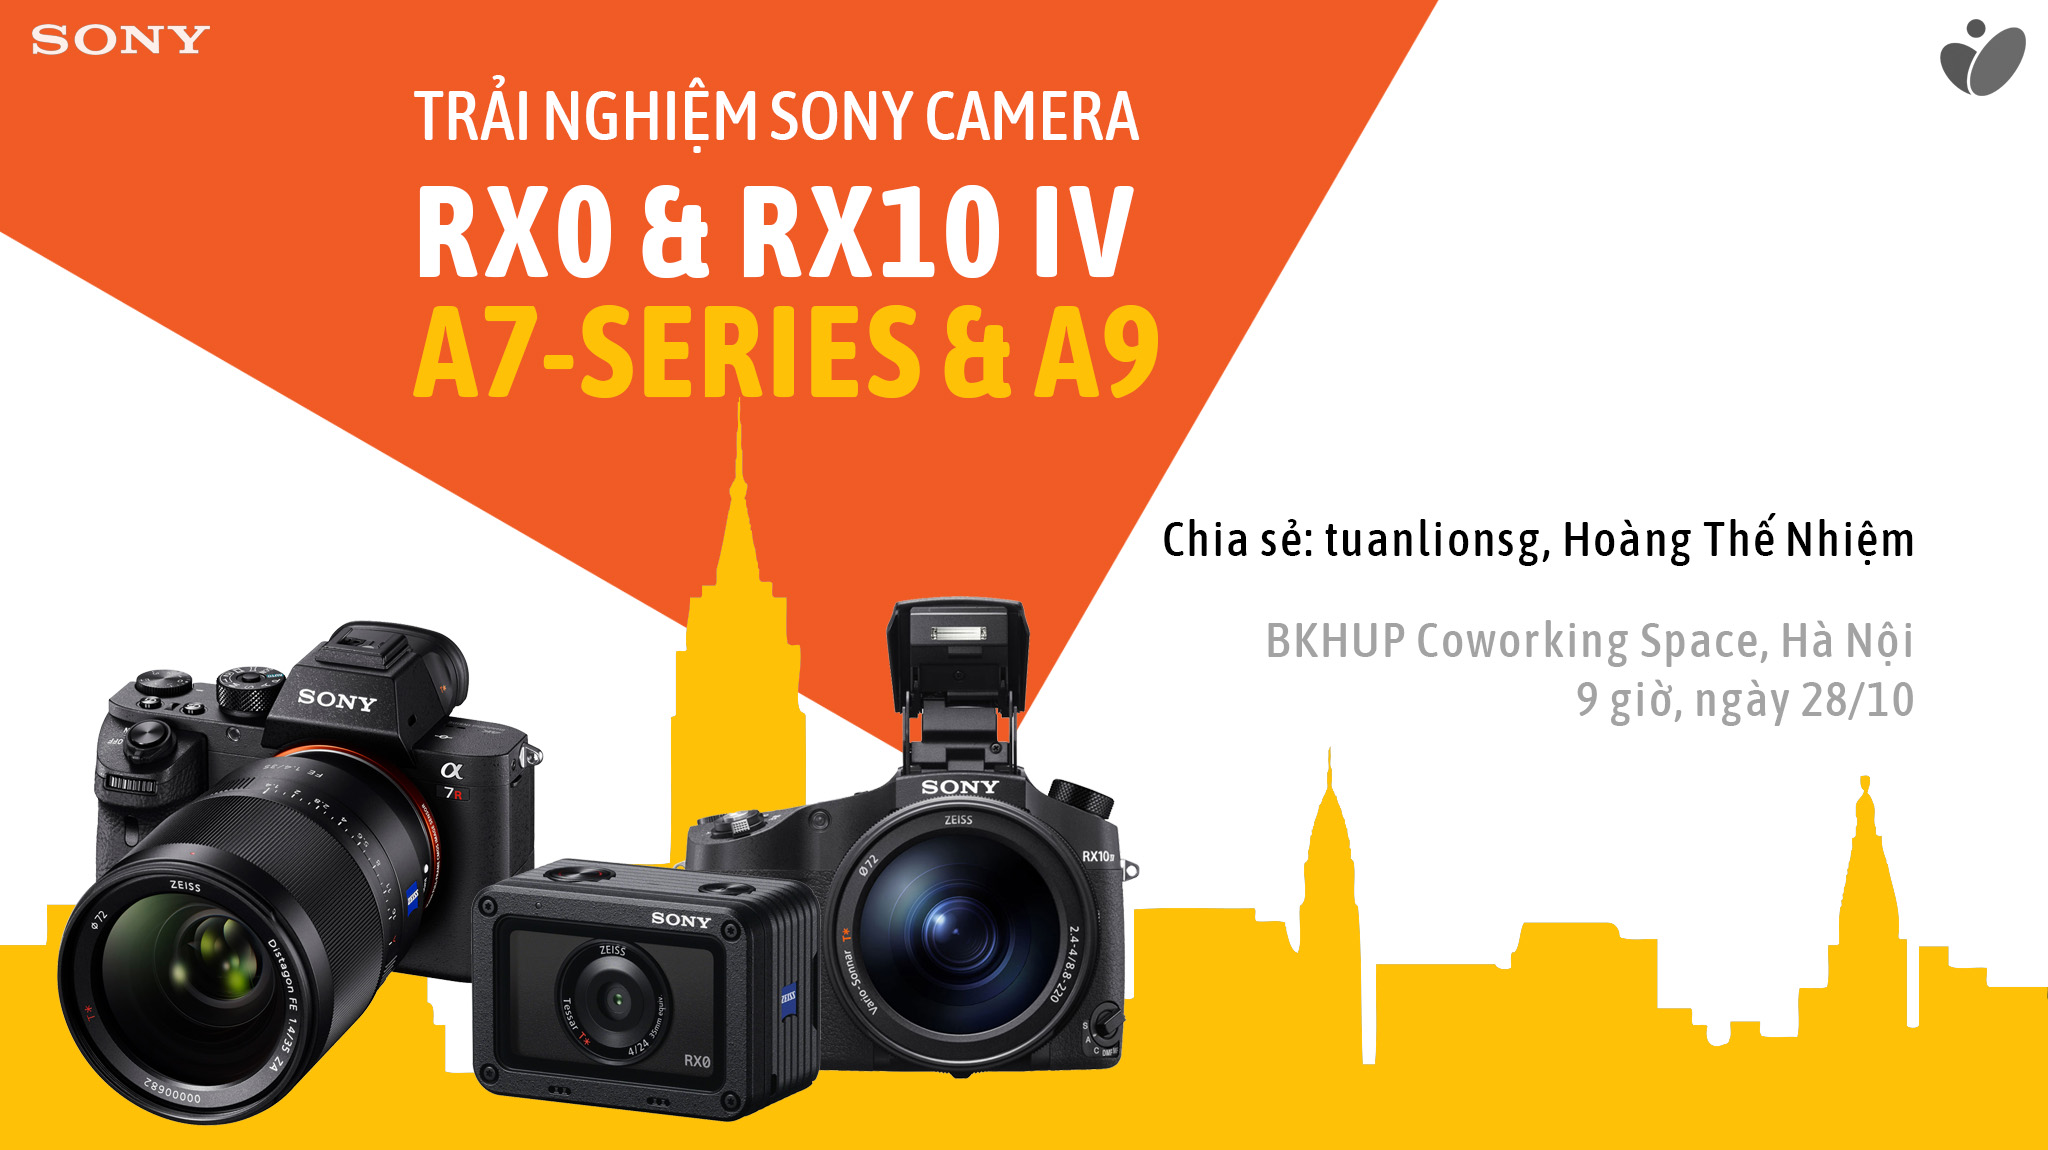 Sony RX0 Backdrop HN, 28-10-17.jpg